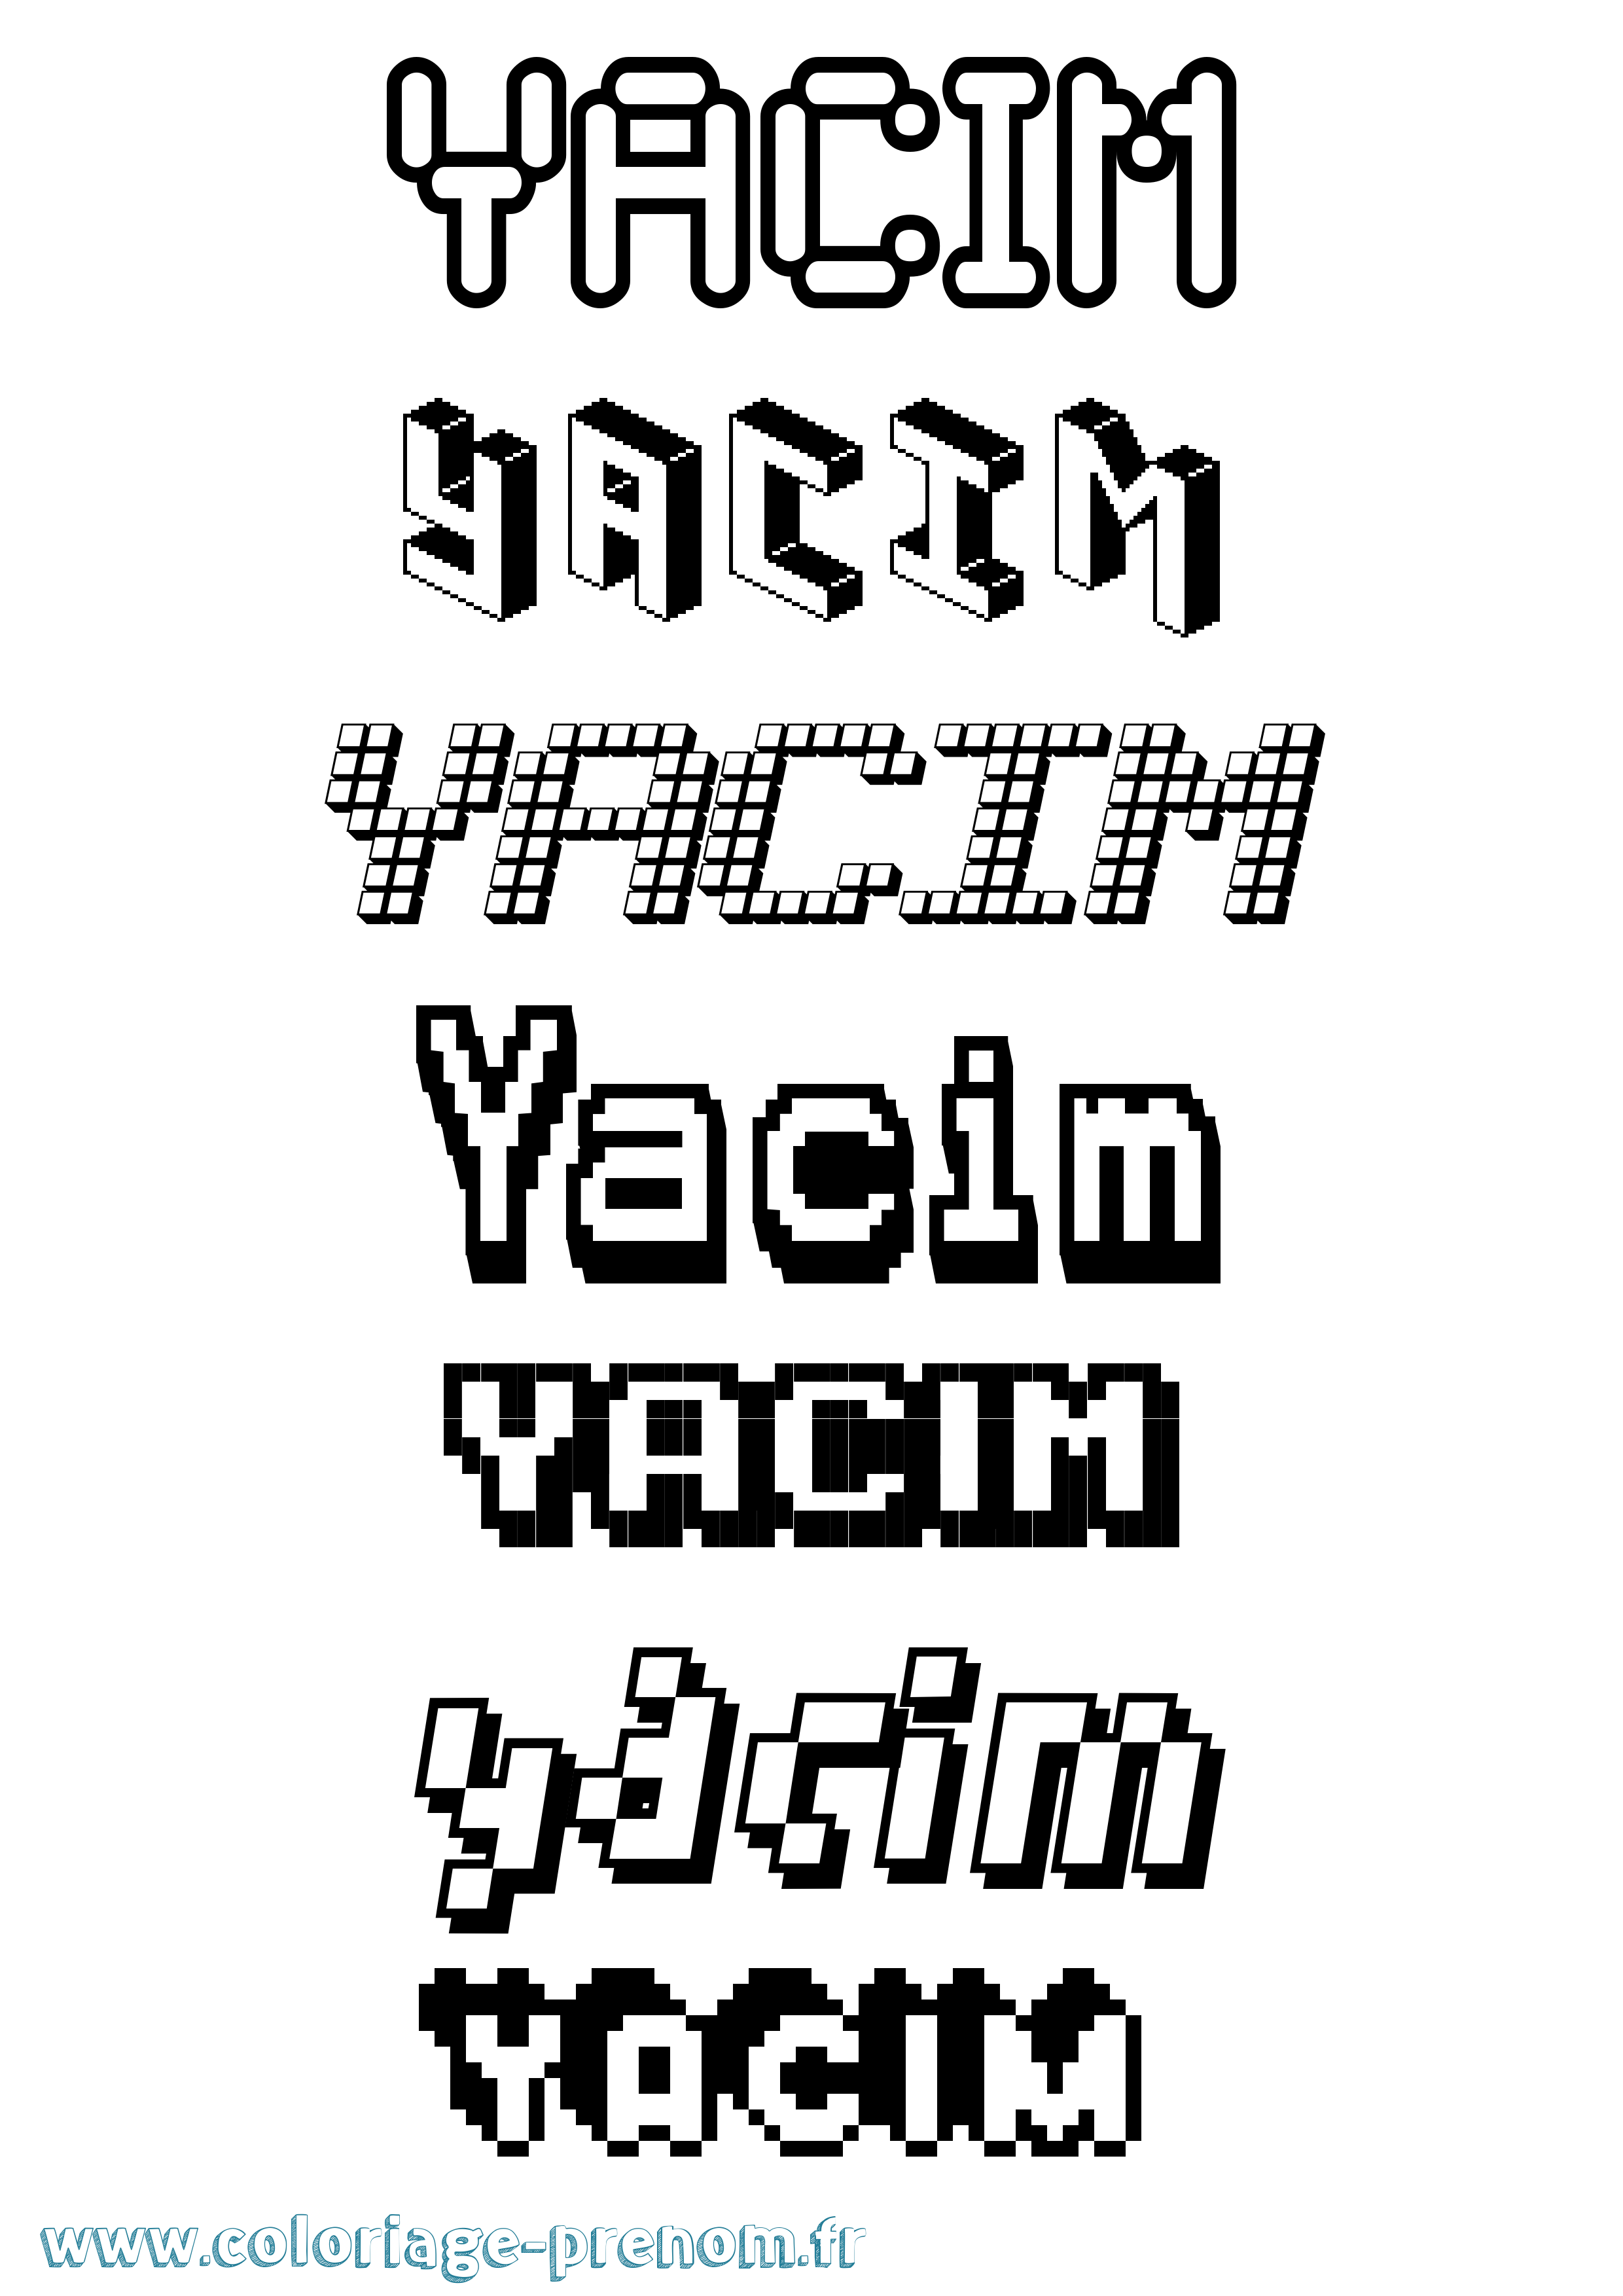 Coloriage prénom Yacim Pixel